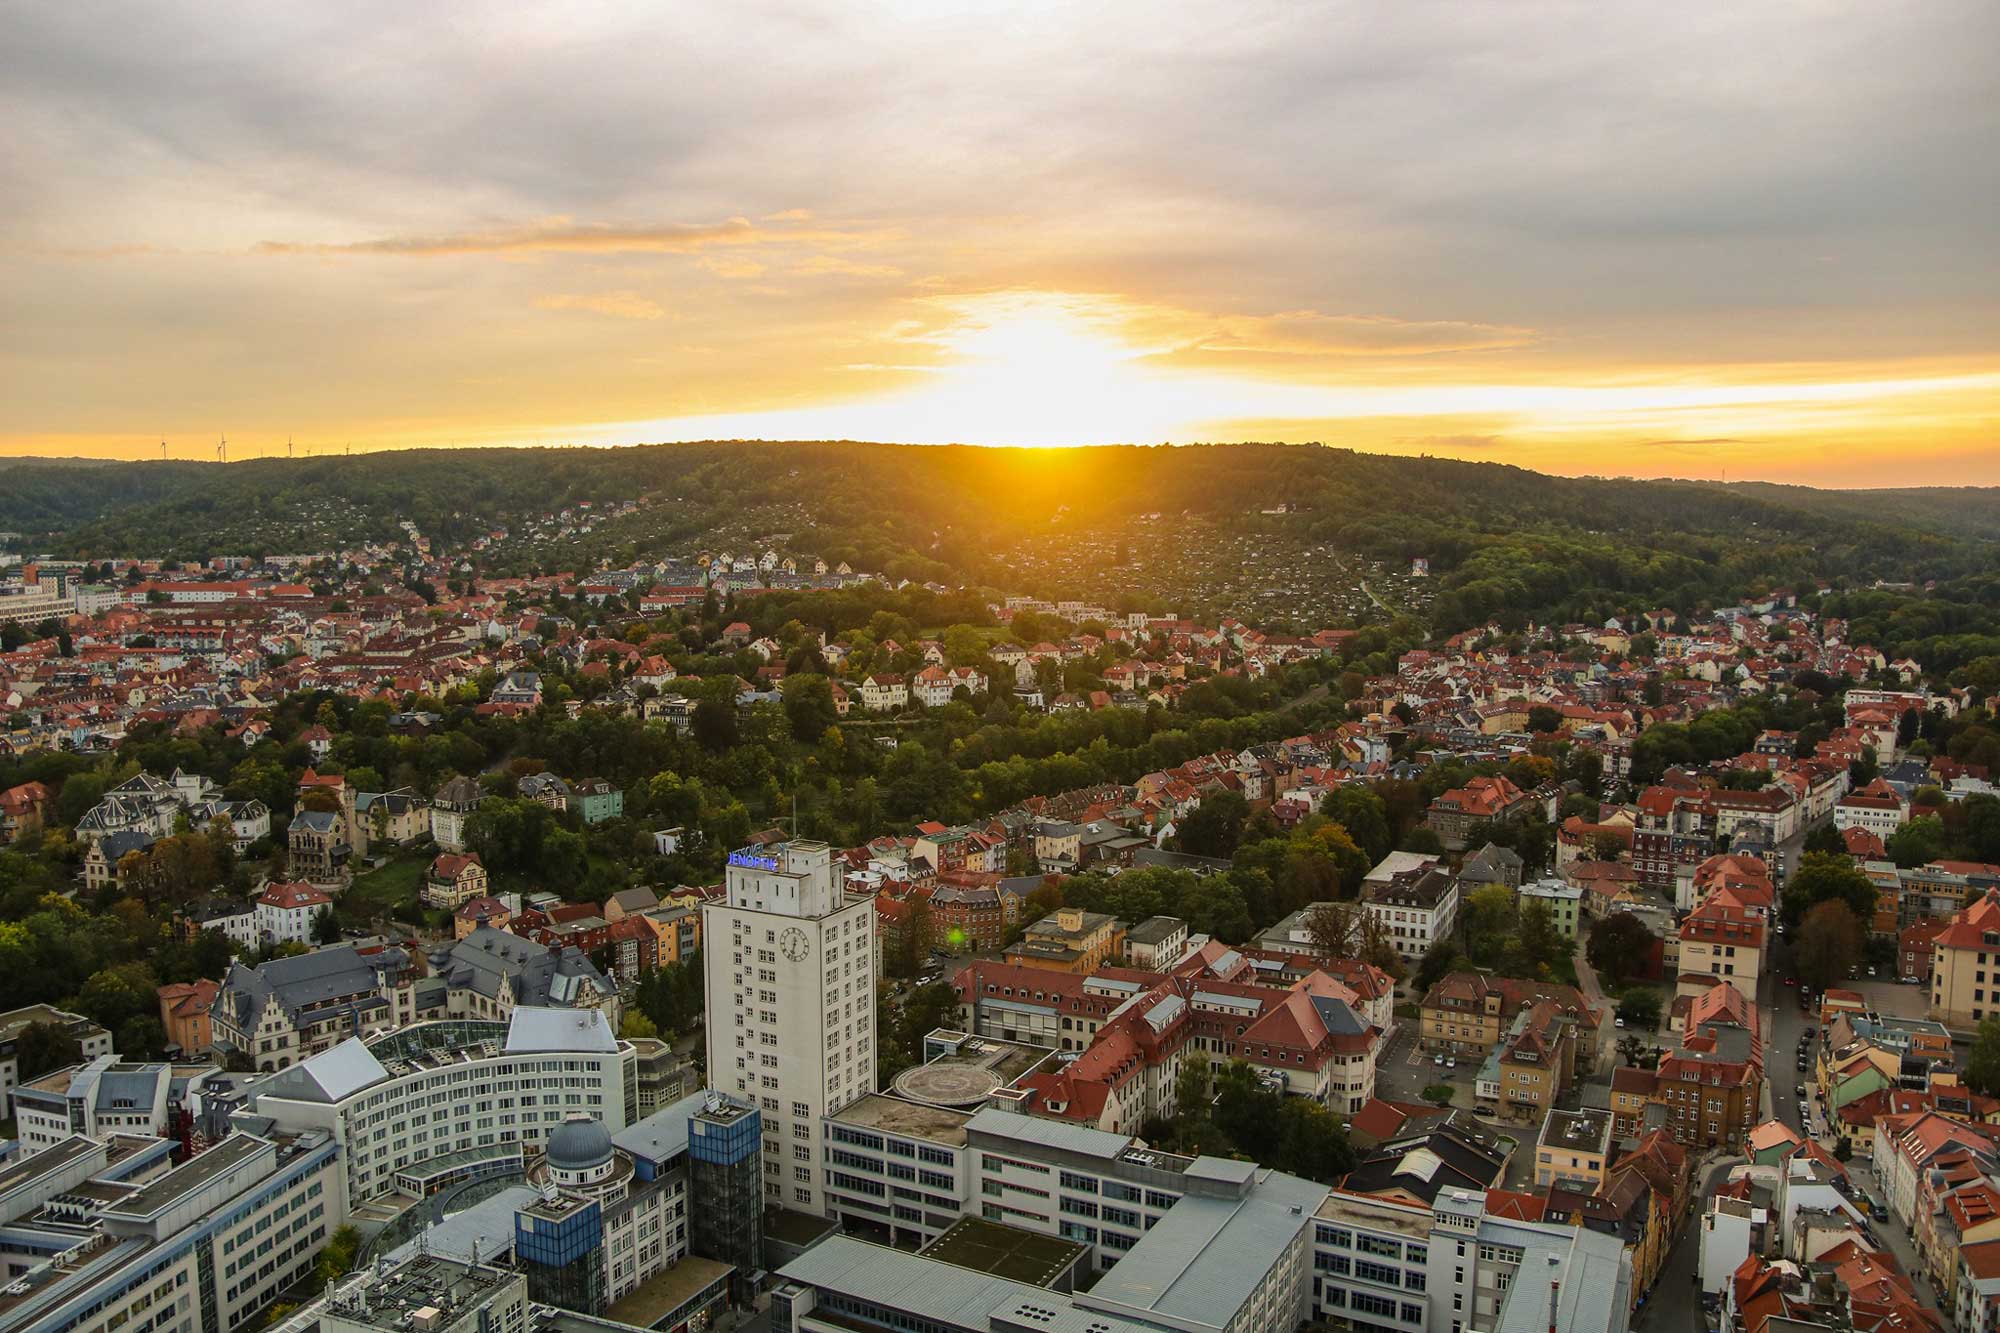 Panorama-Ausblick auf Jena